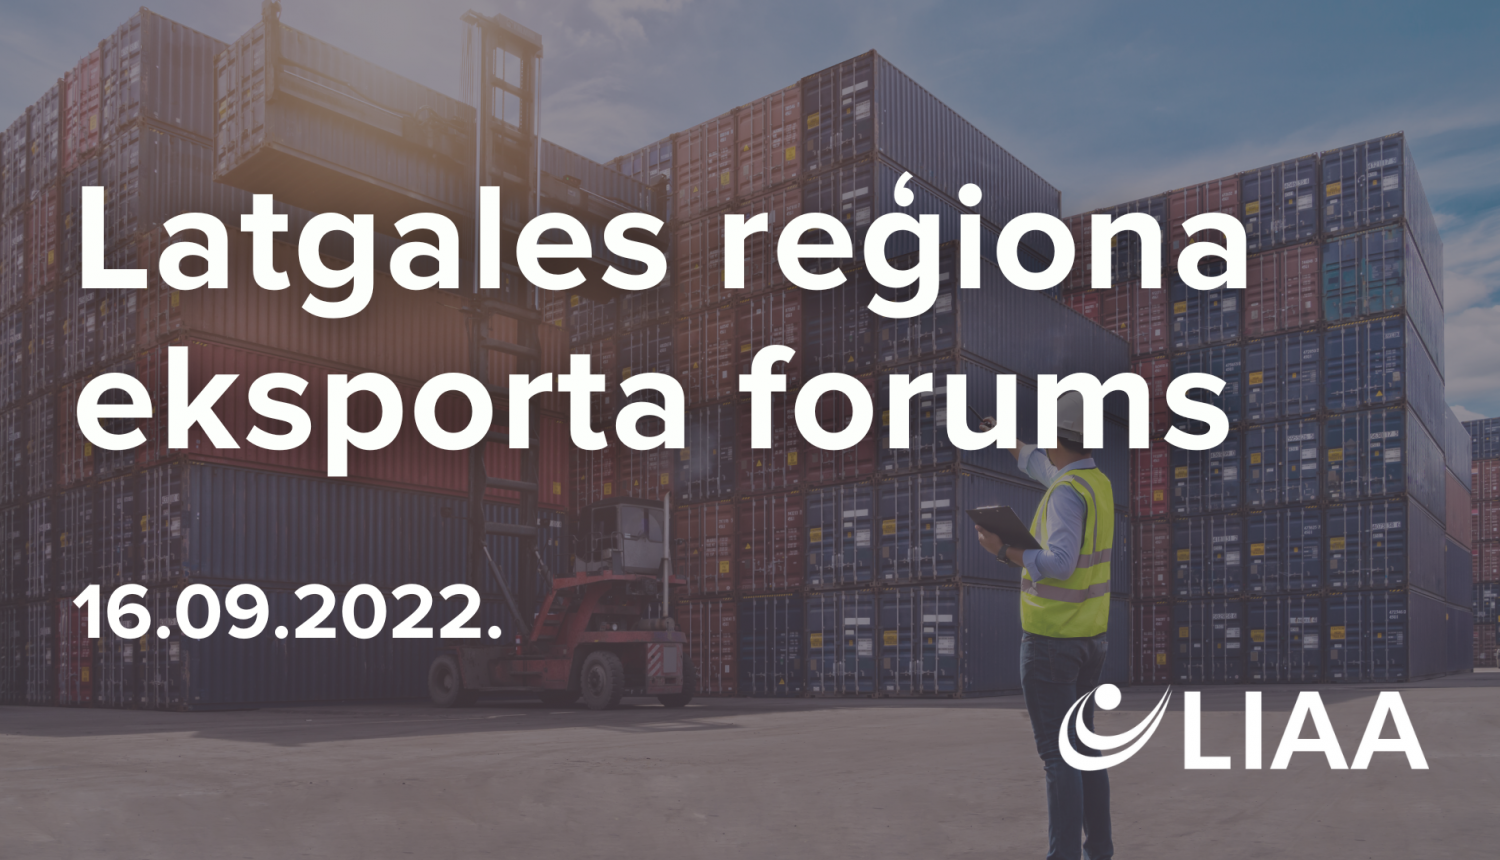 Latgales reģiona eksporta forums